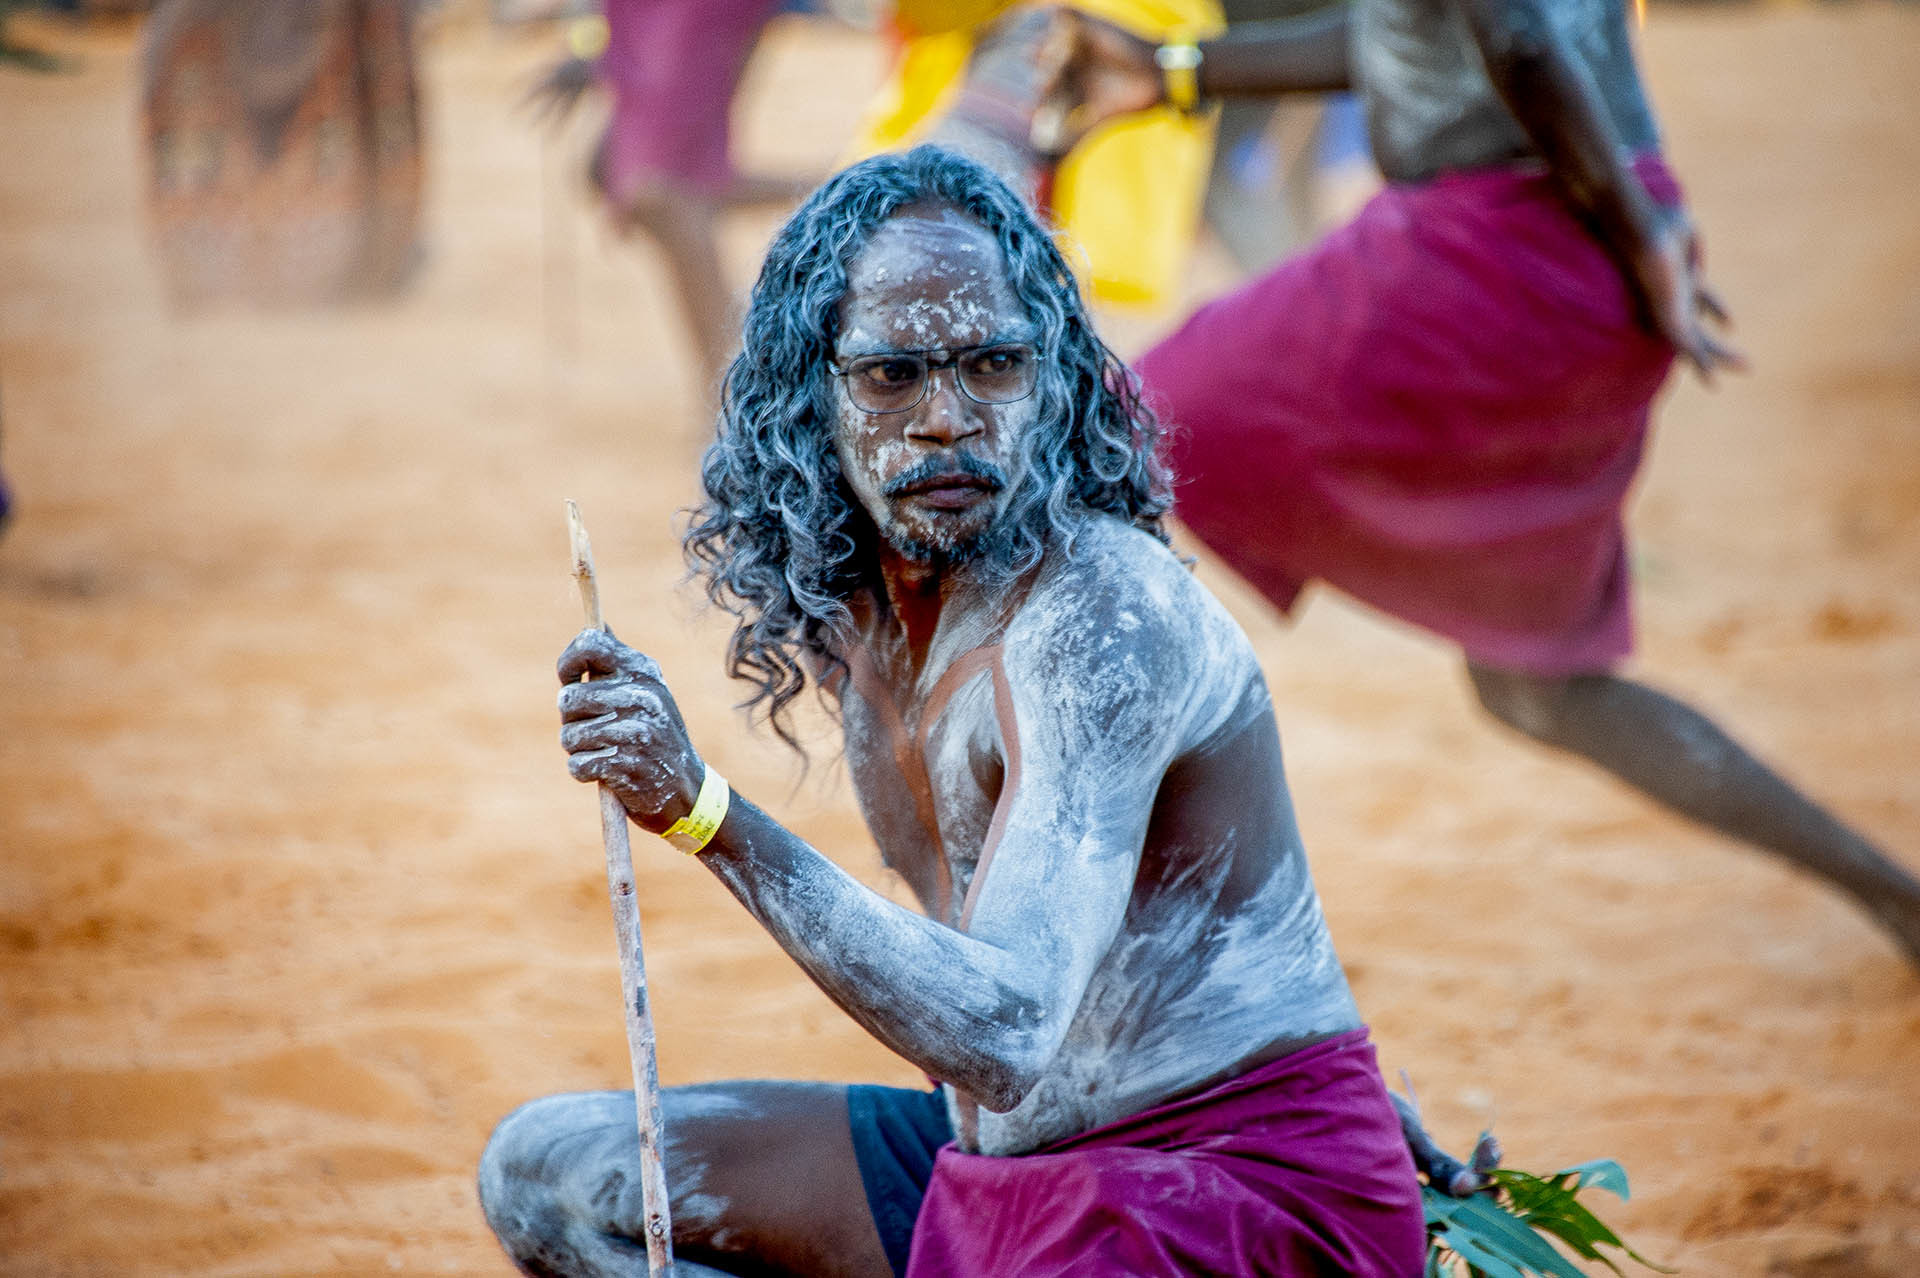 Man performing traditional aboriginal dance